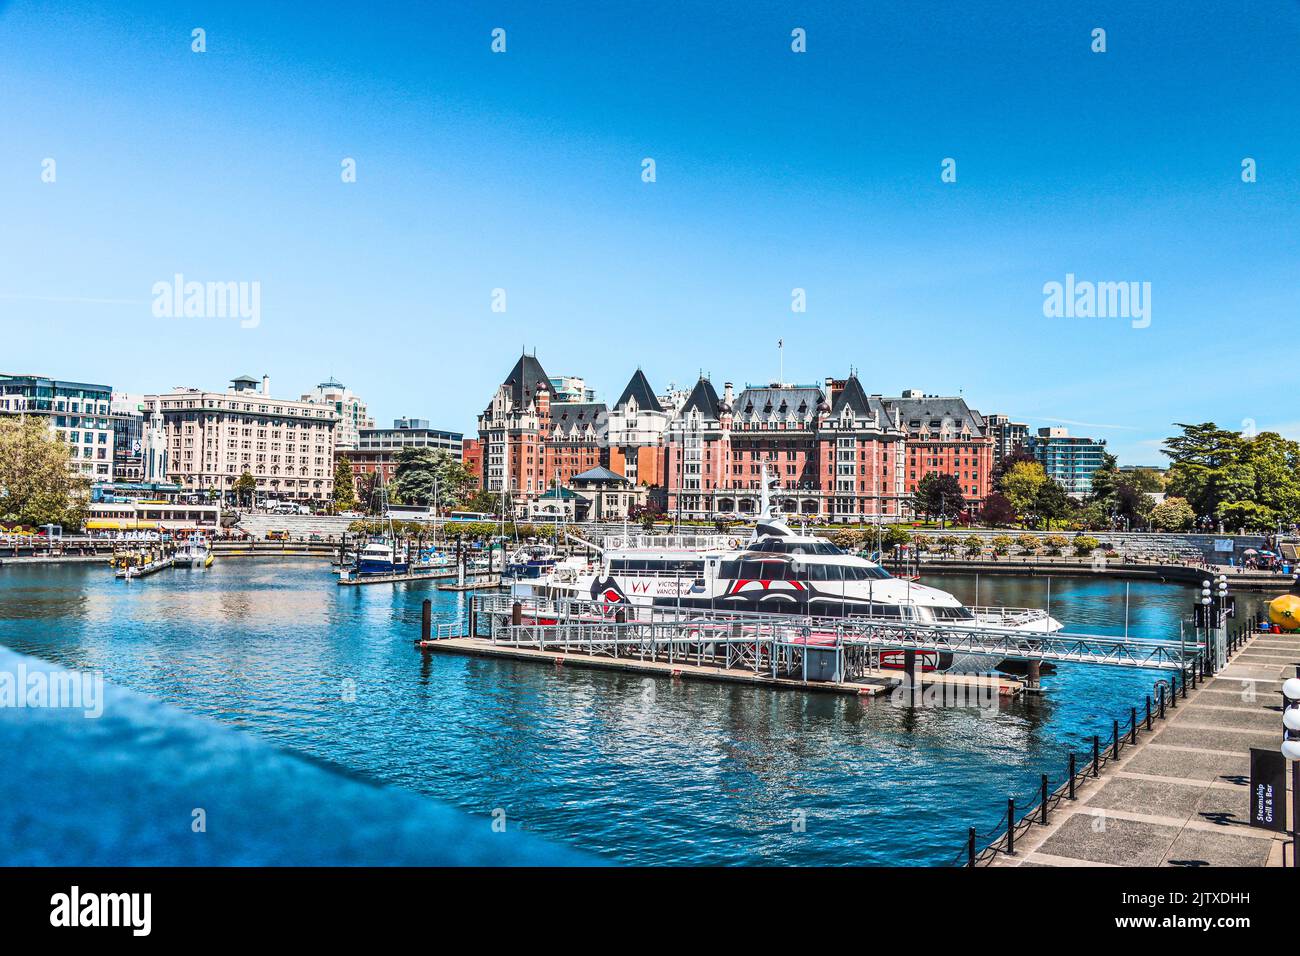 Fairmont Empress Hotel and Victoria Harbor. Victoria, Vancouver Island, British Columbia, Canada. Stock Photo